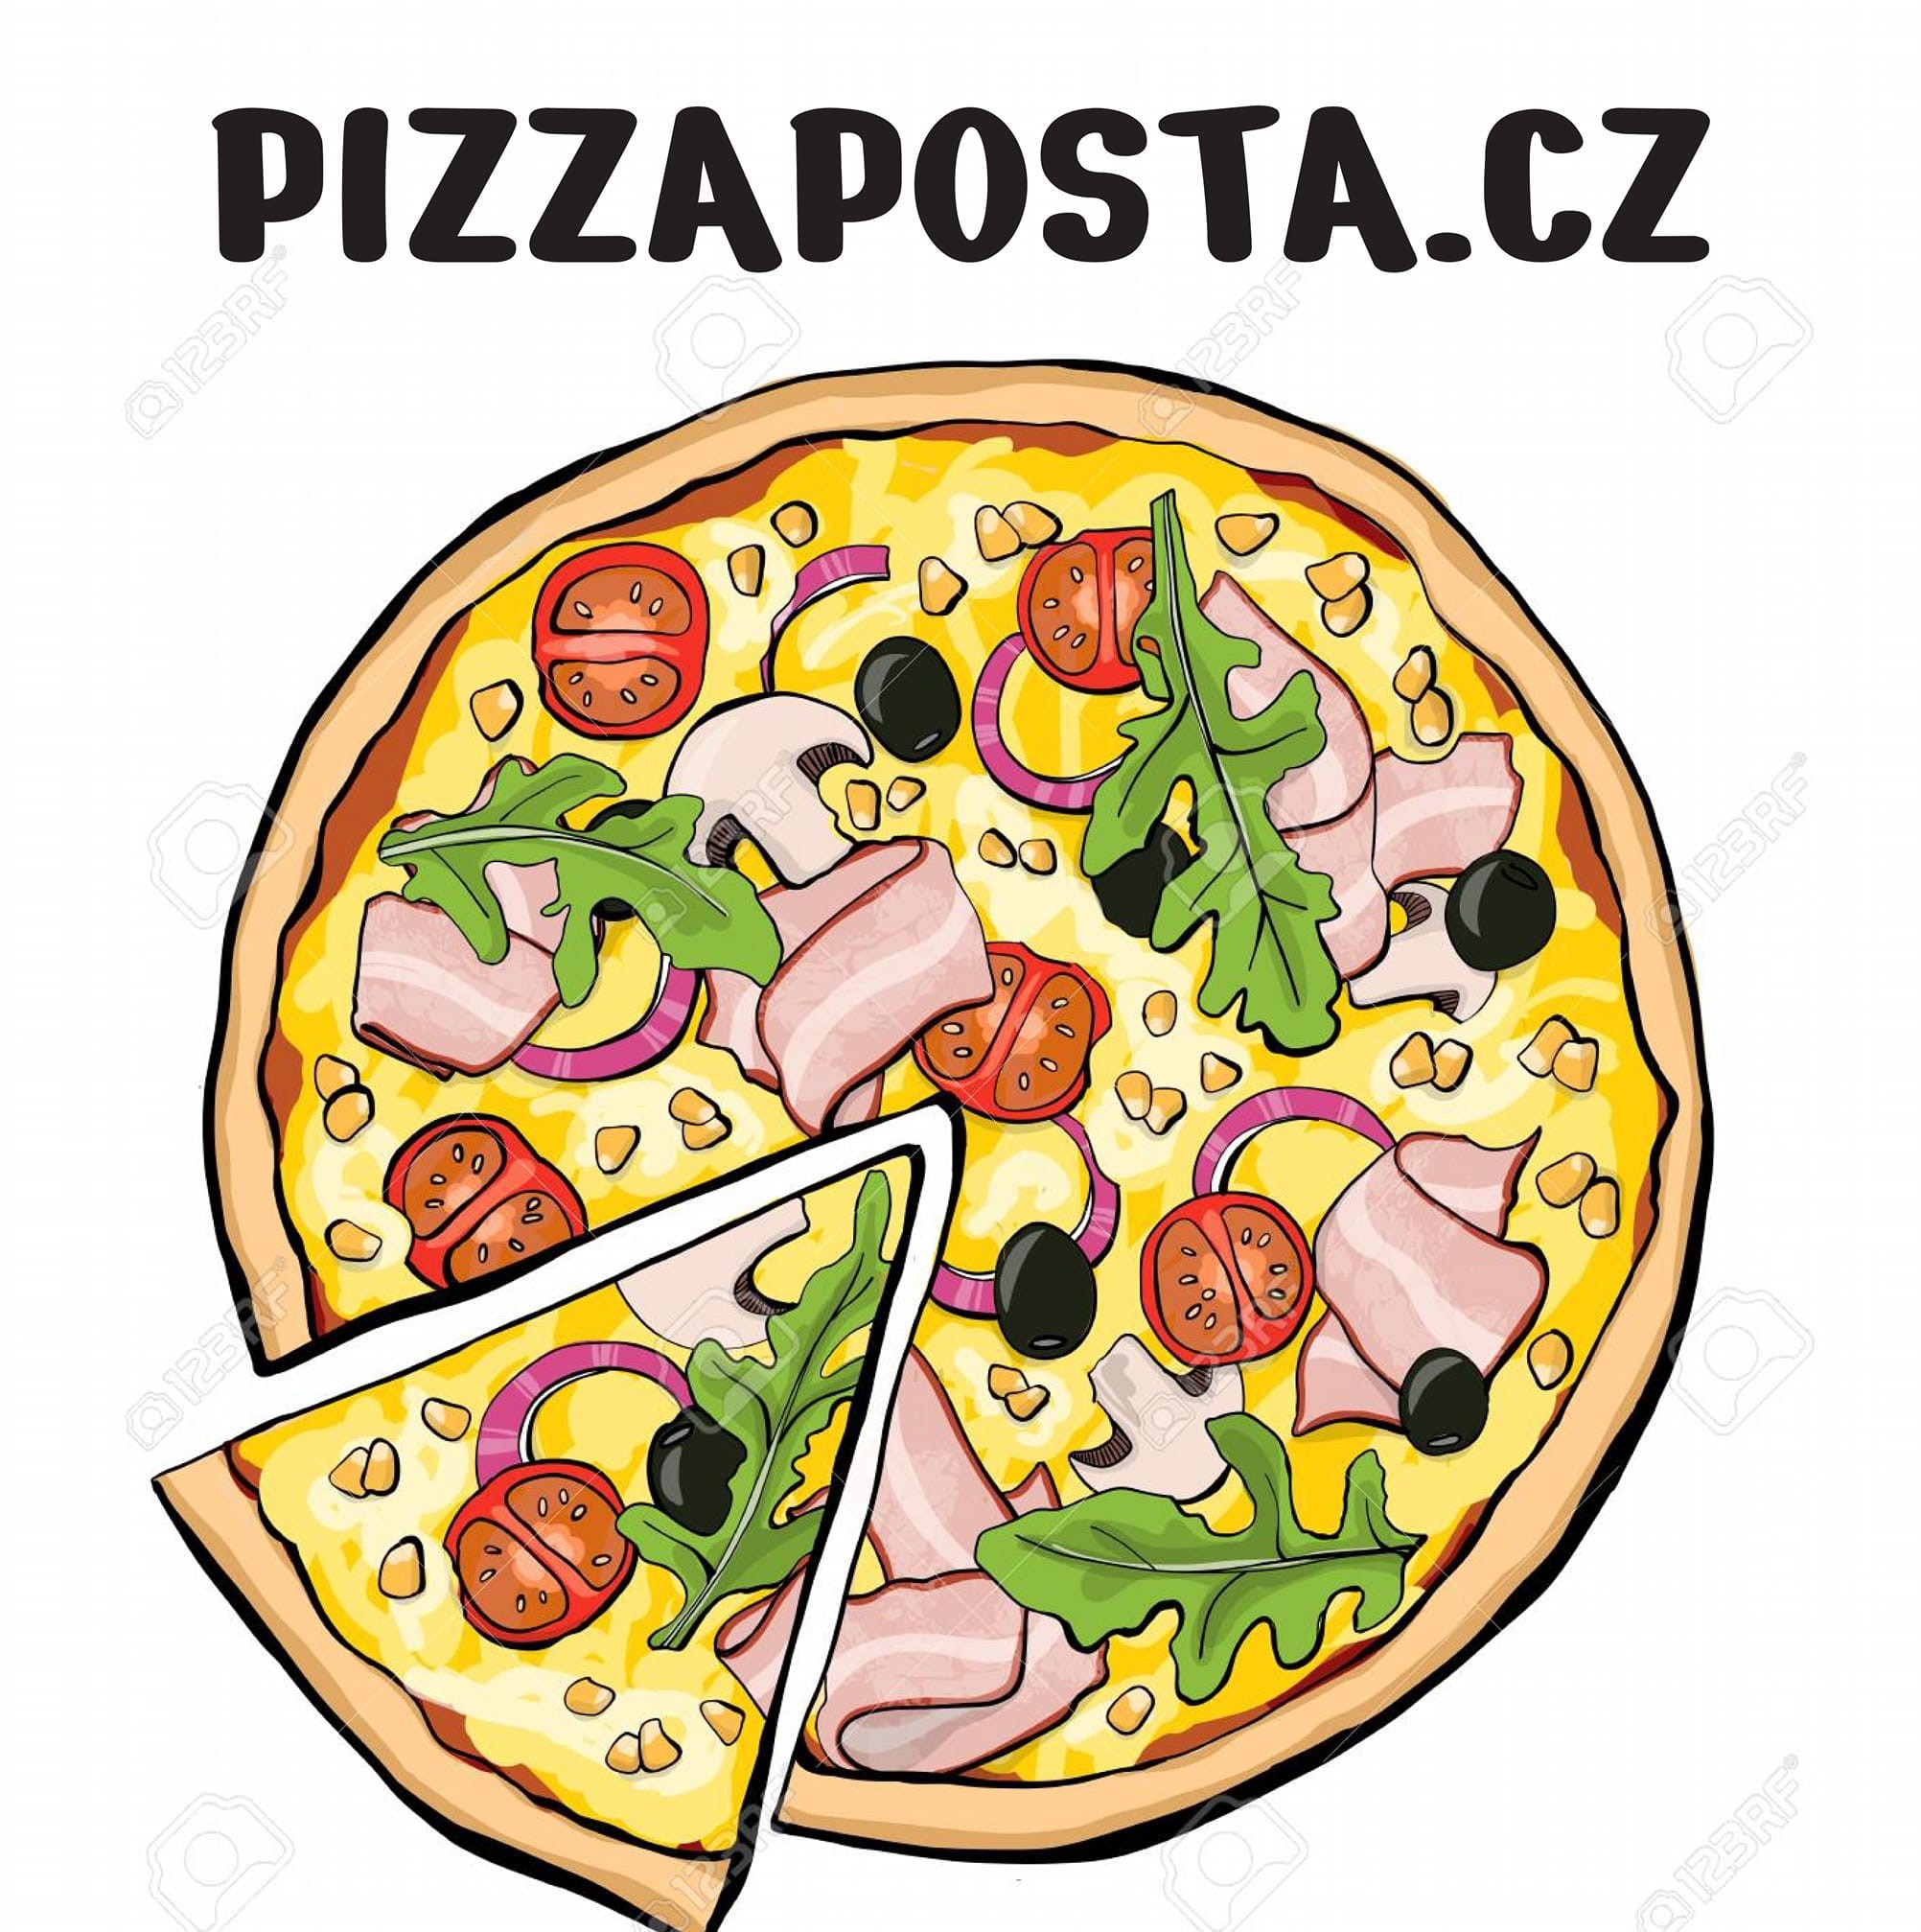 Image of Pizza Pošta